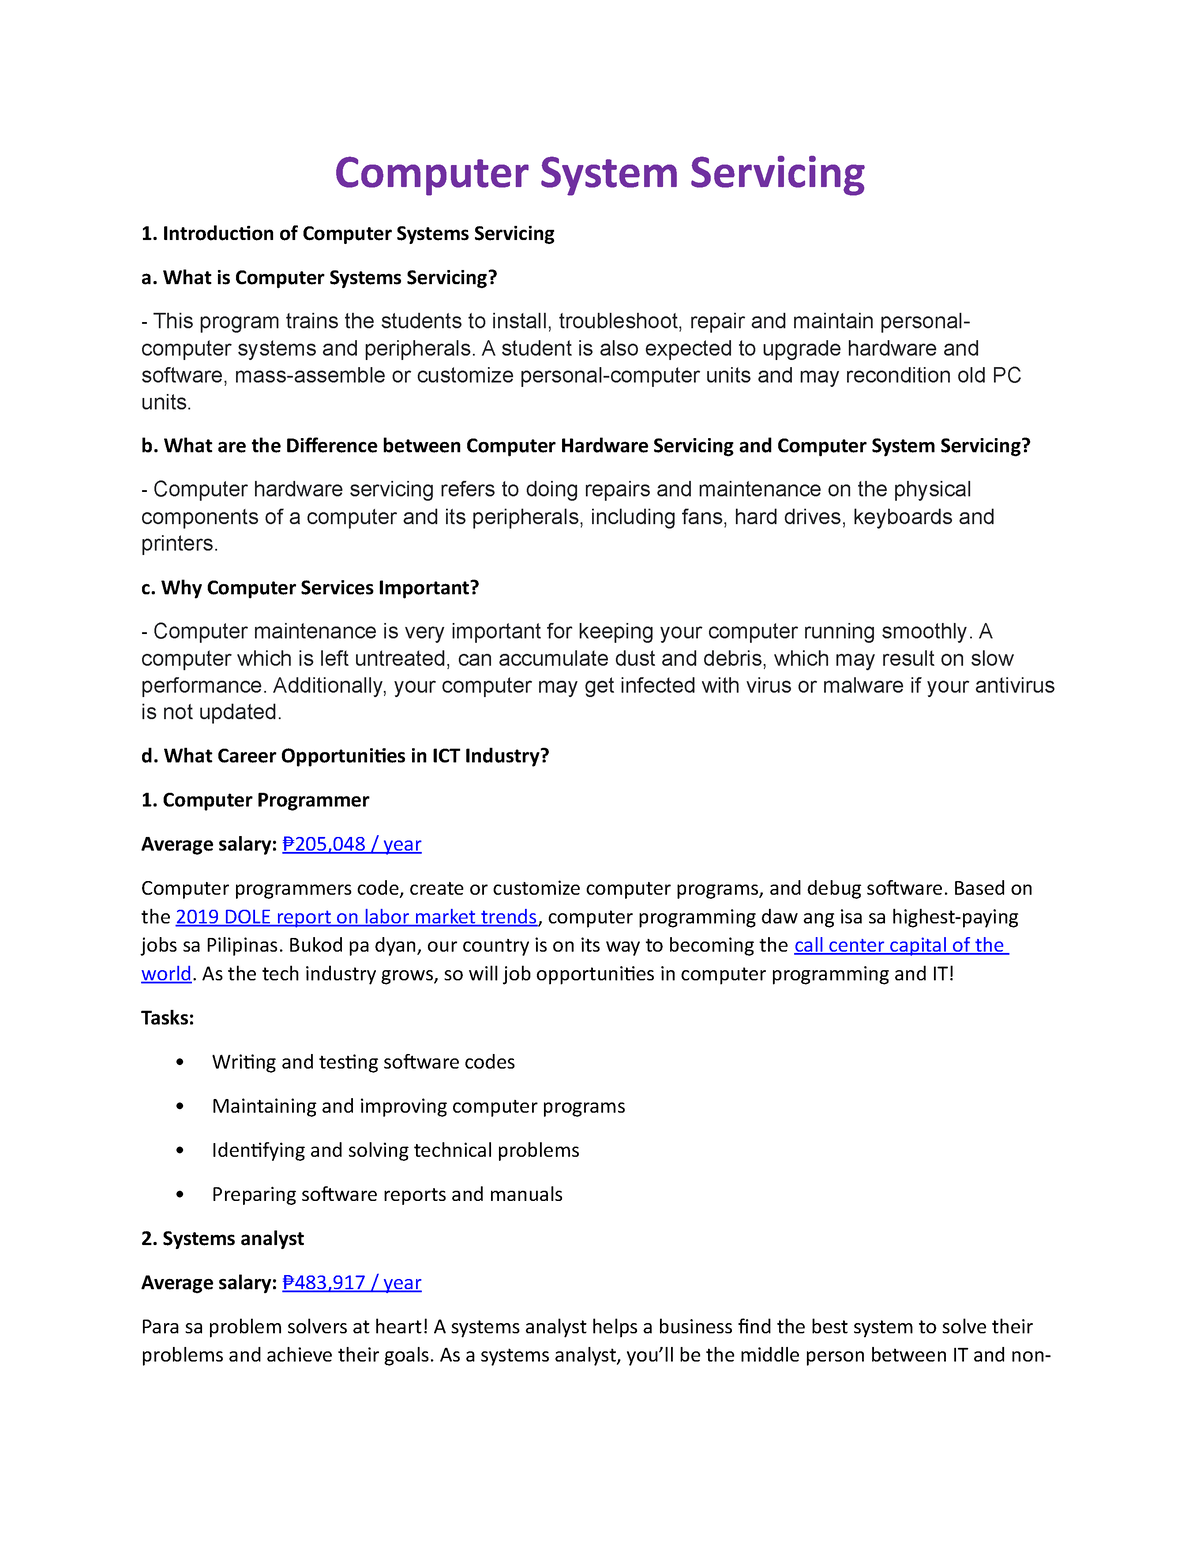 quantitative research topics about computer system servicing